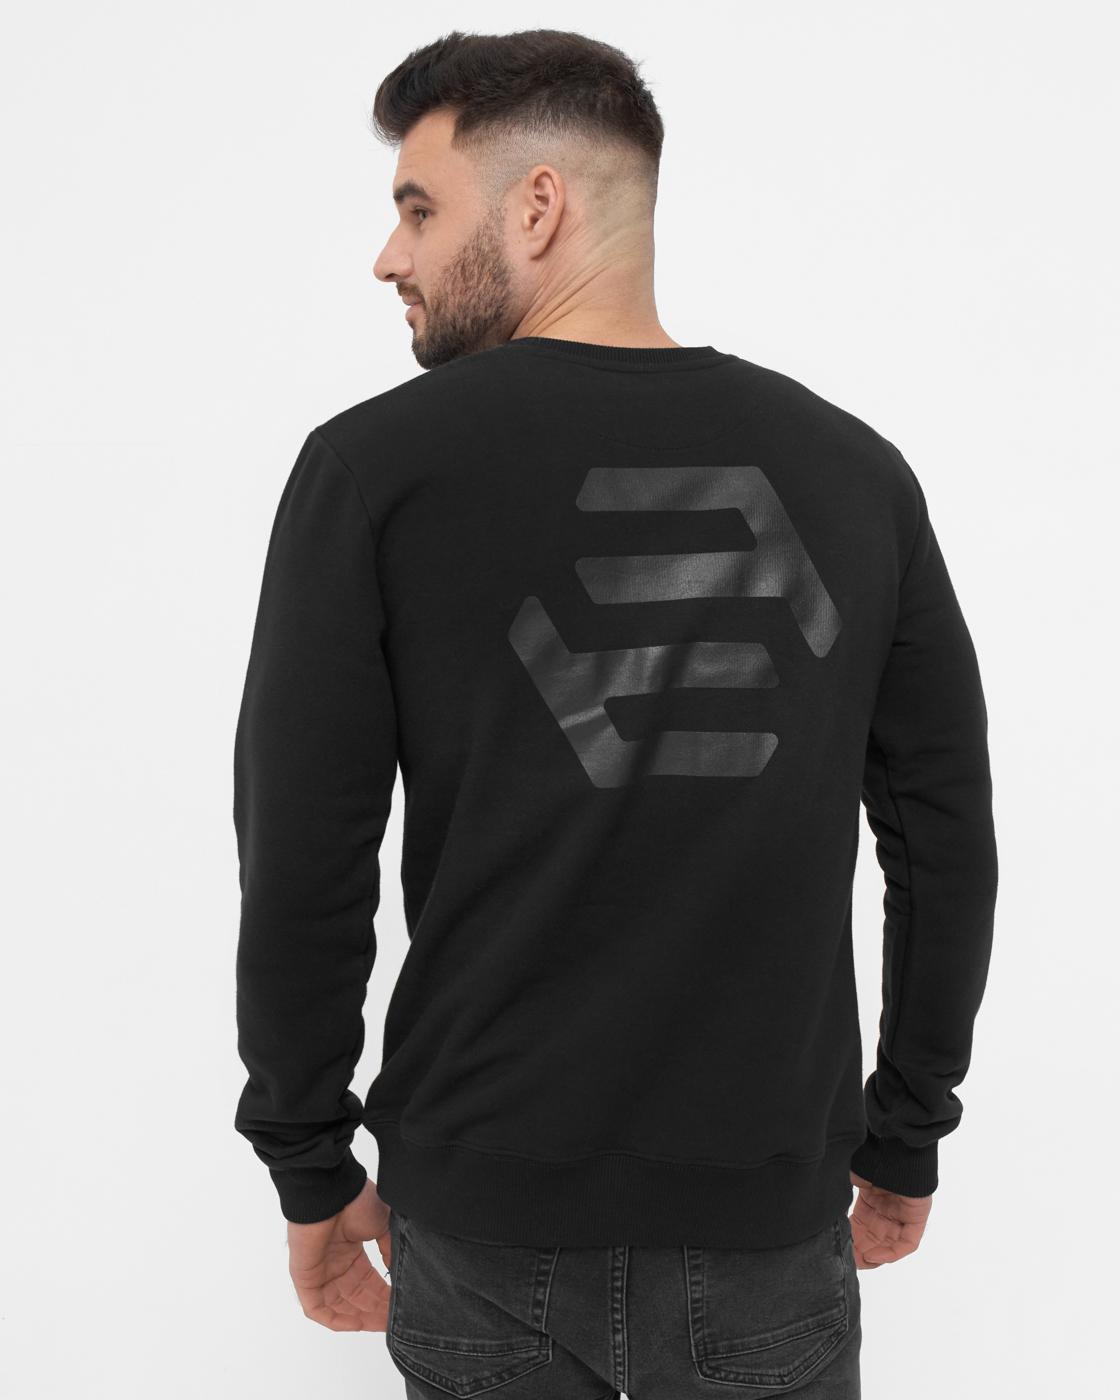 Sweatshirt SOFTFLIX black XXL